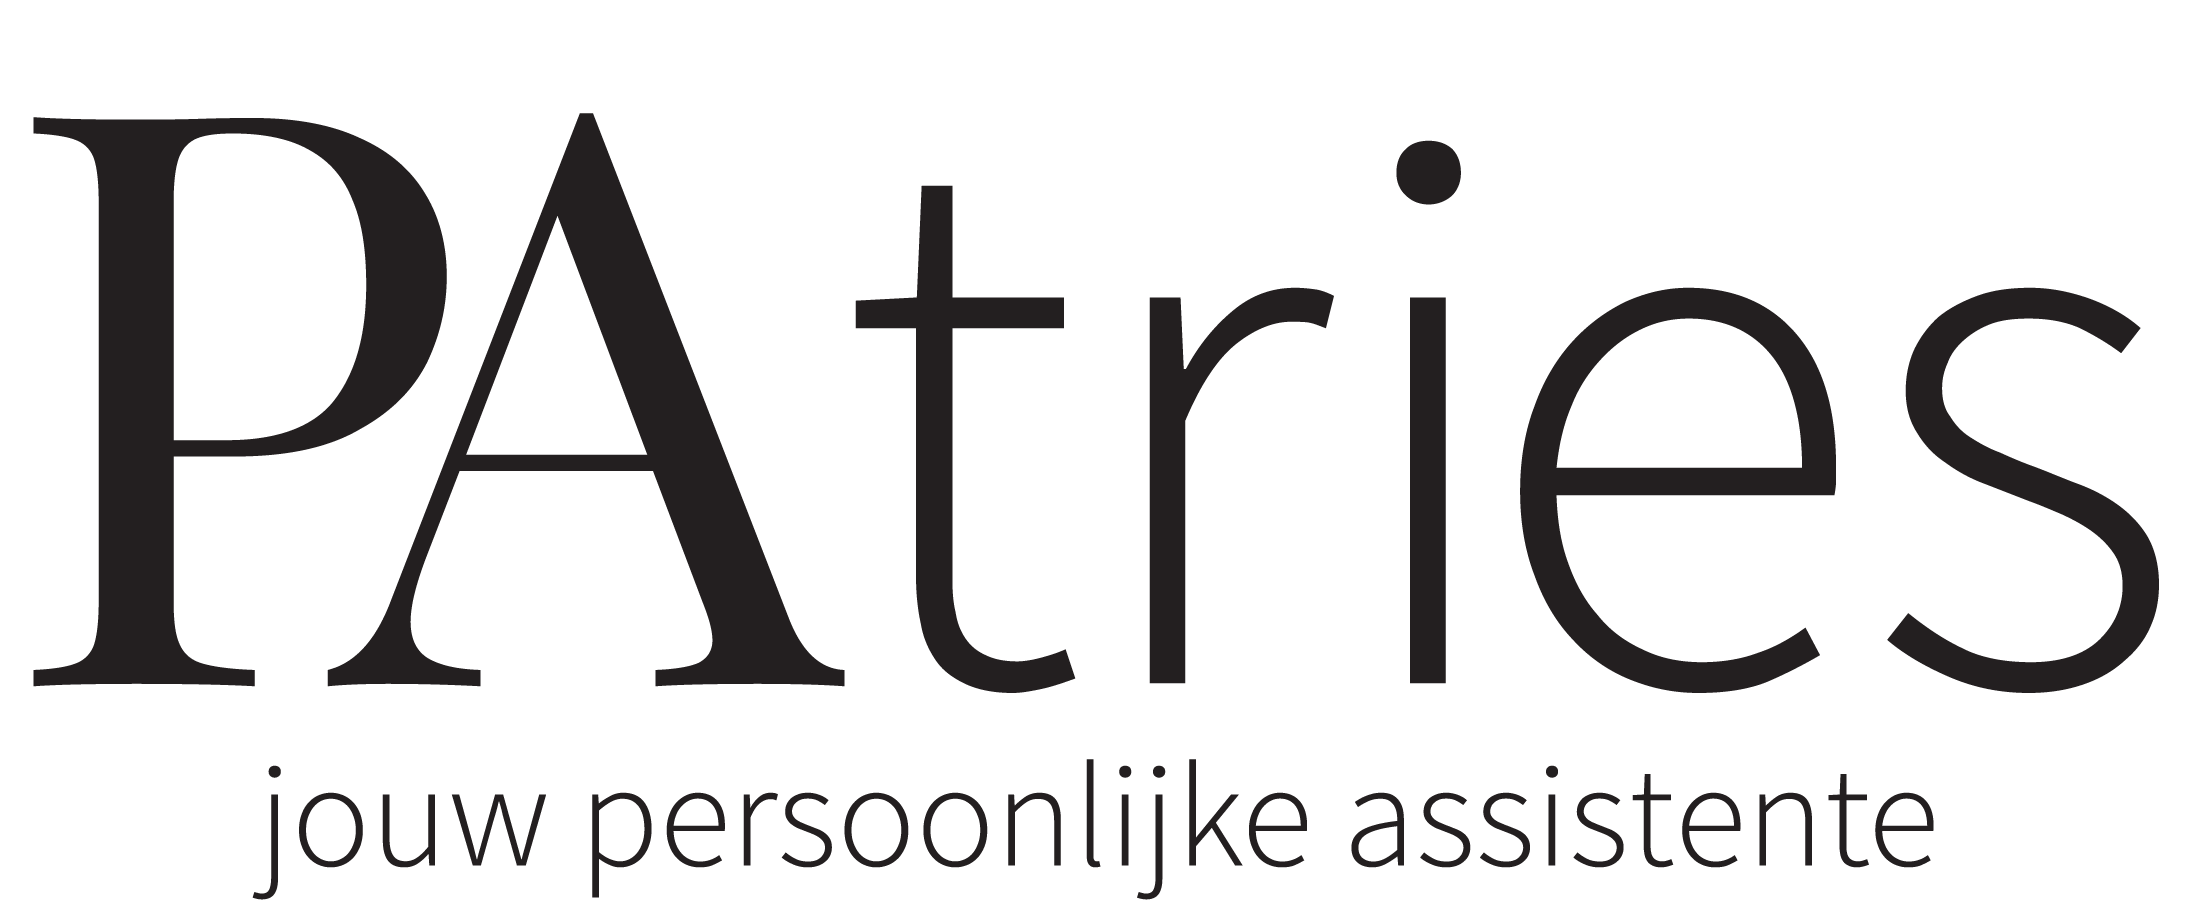 PAtries persoonlijke assistente logo